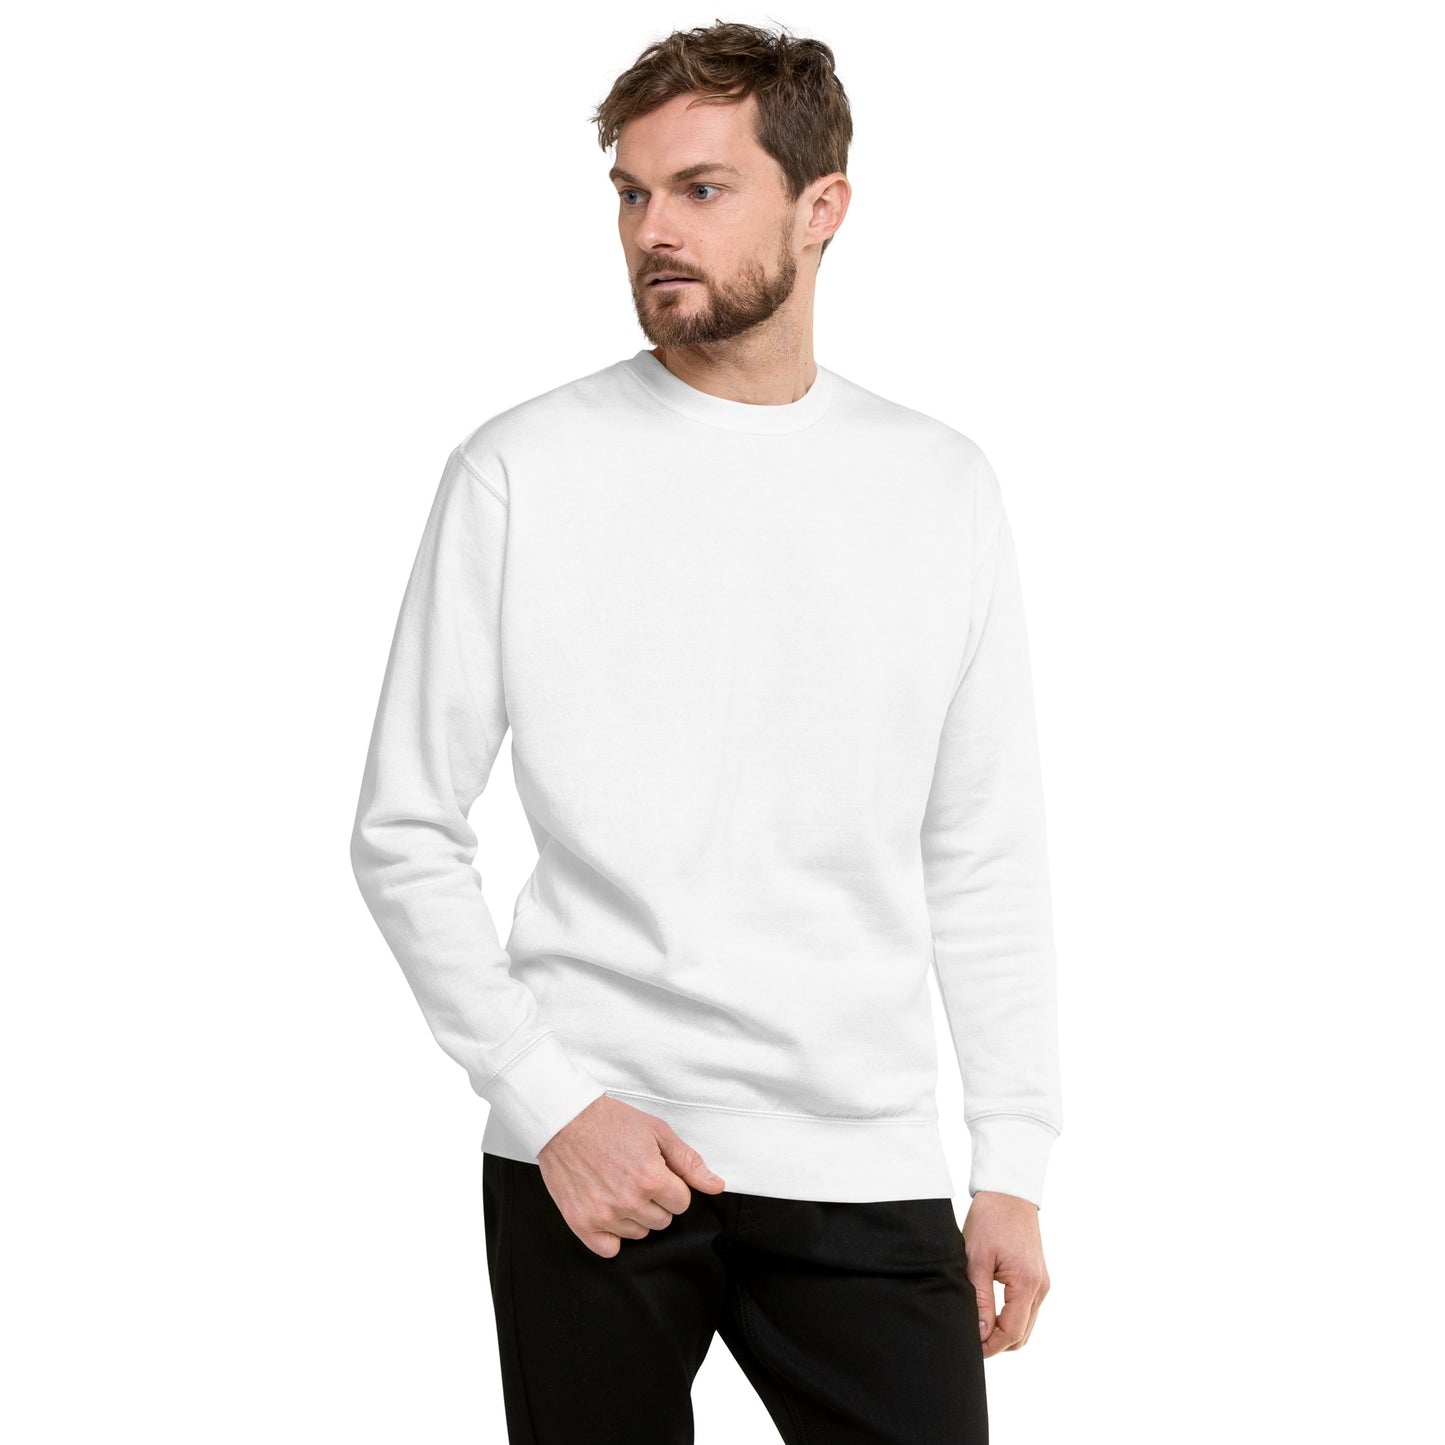 Greenleyland Attire - Keep Life Simple - Highest Quality Unisex Premium Sweatshirt